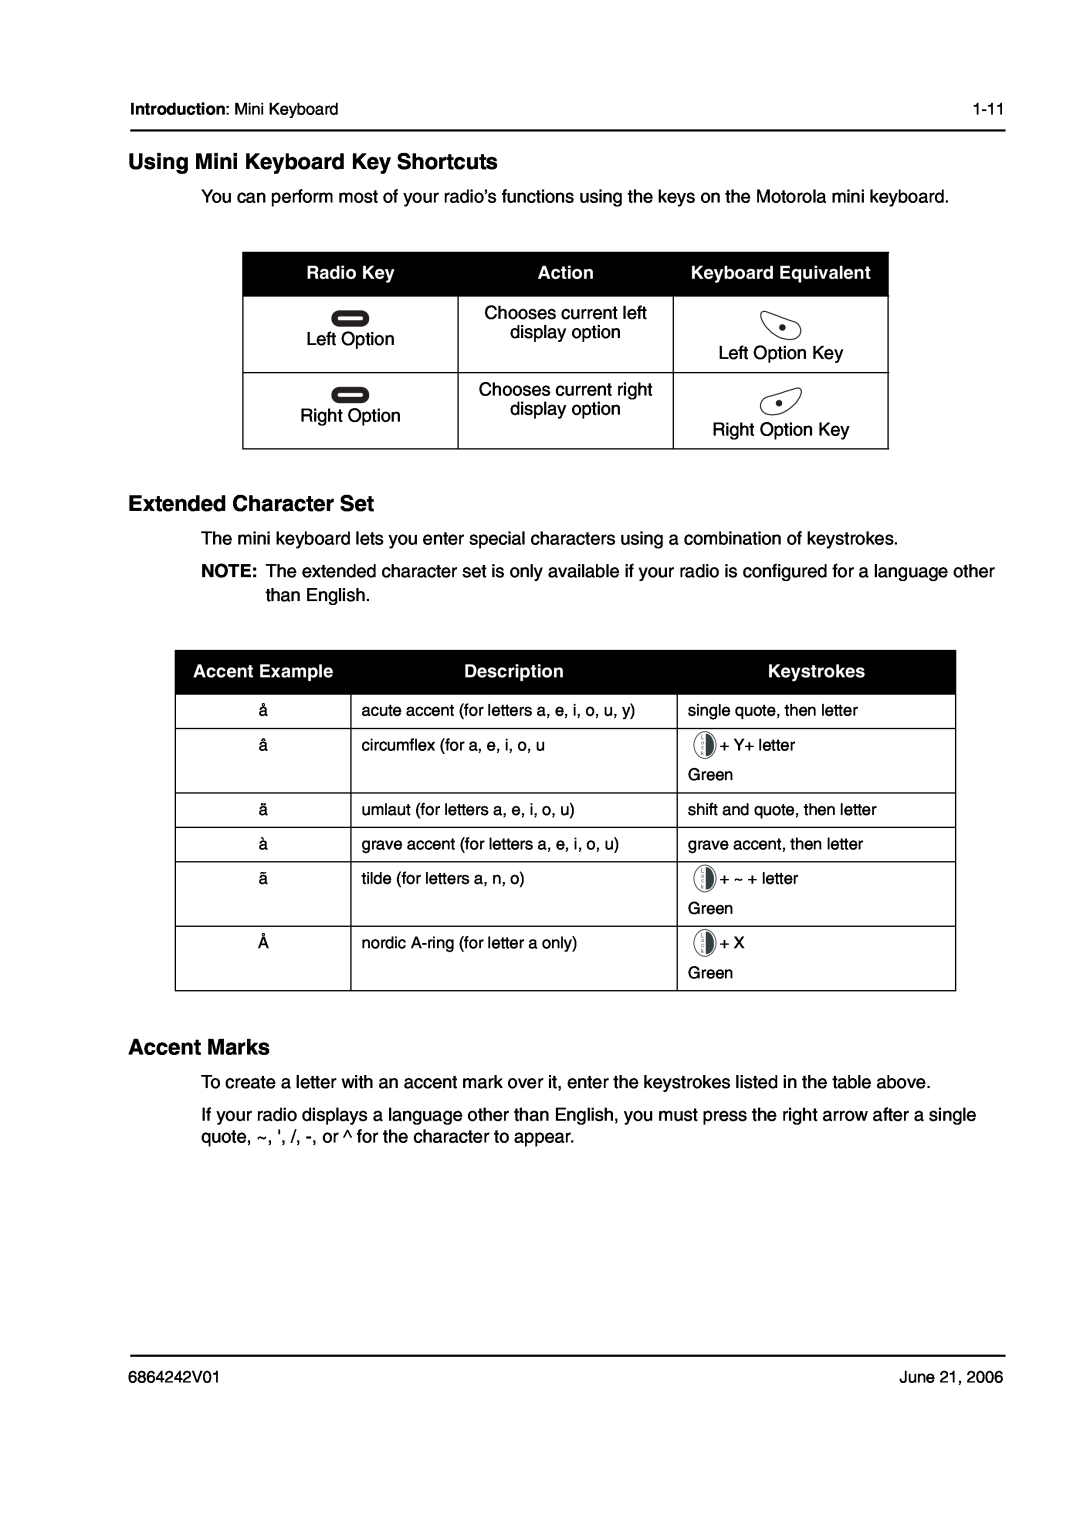 Motorola DTR2430 Using Mini Keyboard Key Shortcuts, Extended Character Set, Accent Marks, Radio Key, Action, Description 